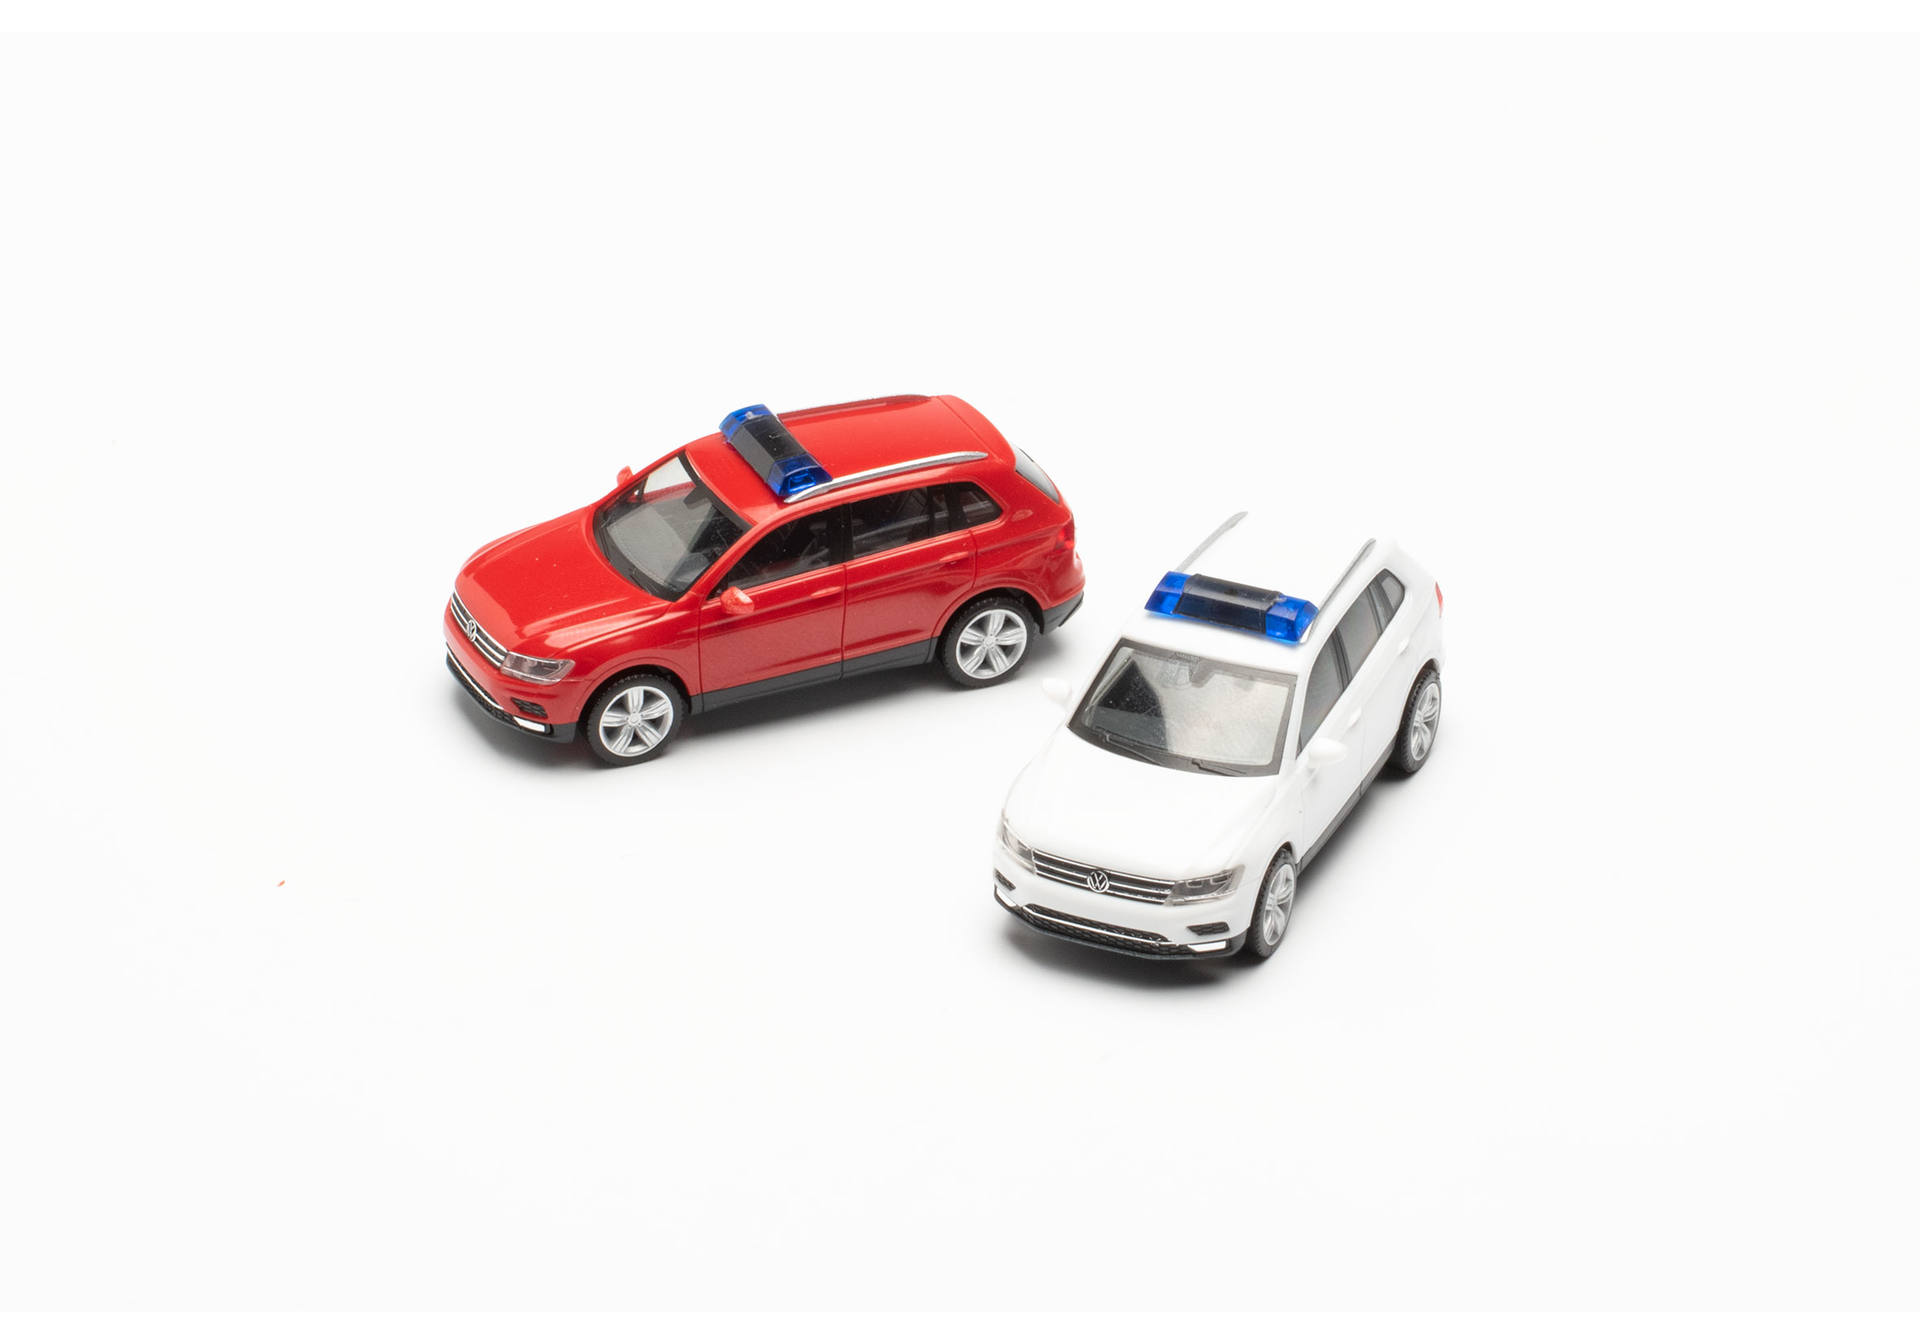 Herpa MiniKit: Volkswagen (VW) Tiguan mit Warnbalken (2er Set)